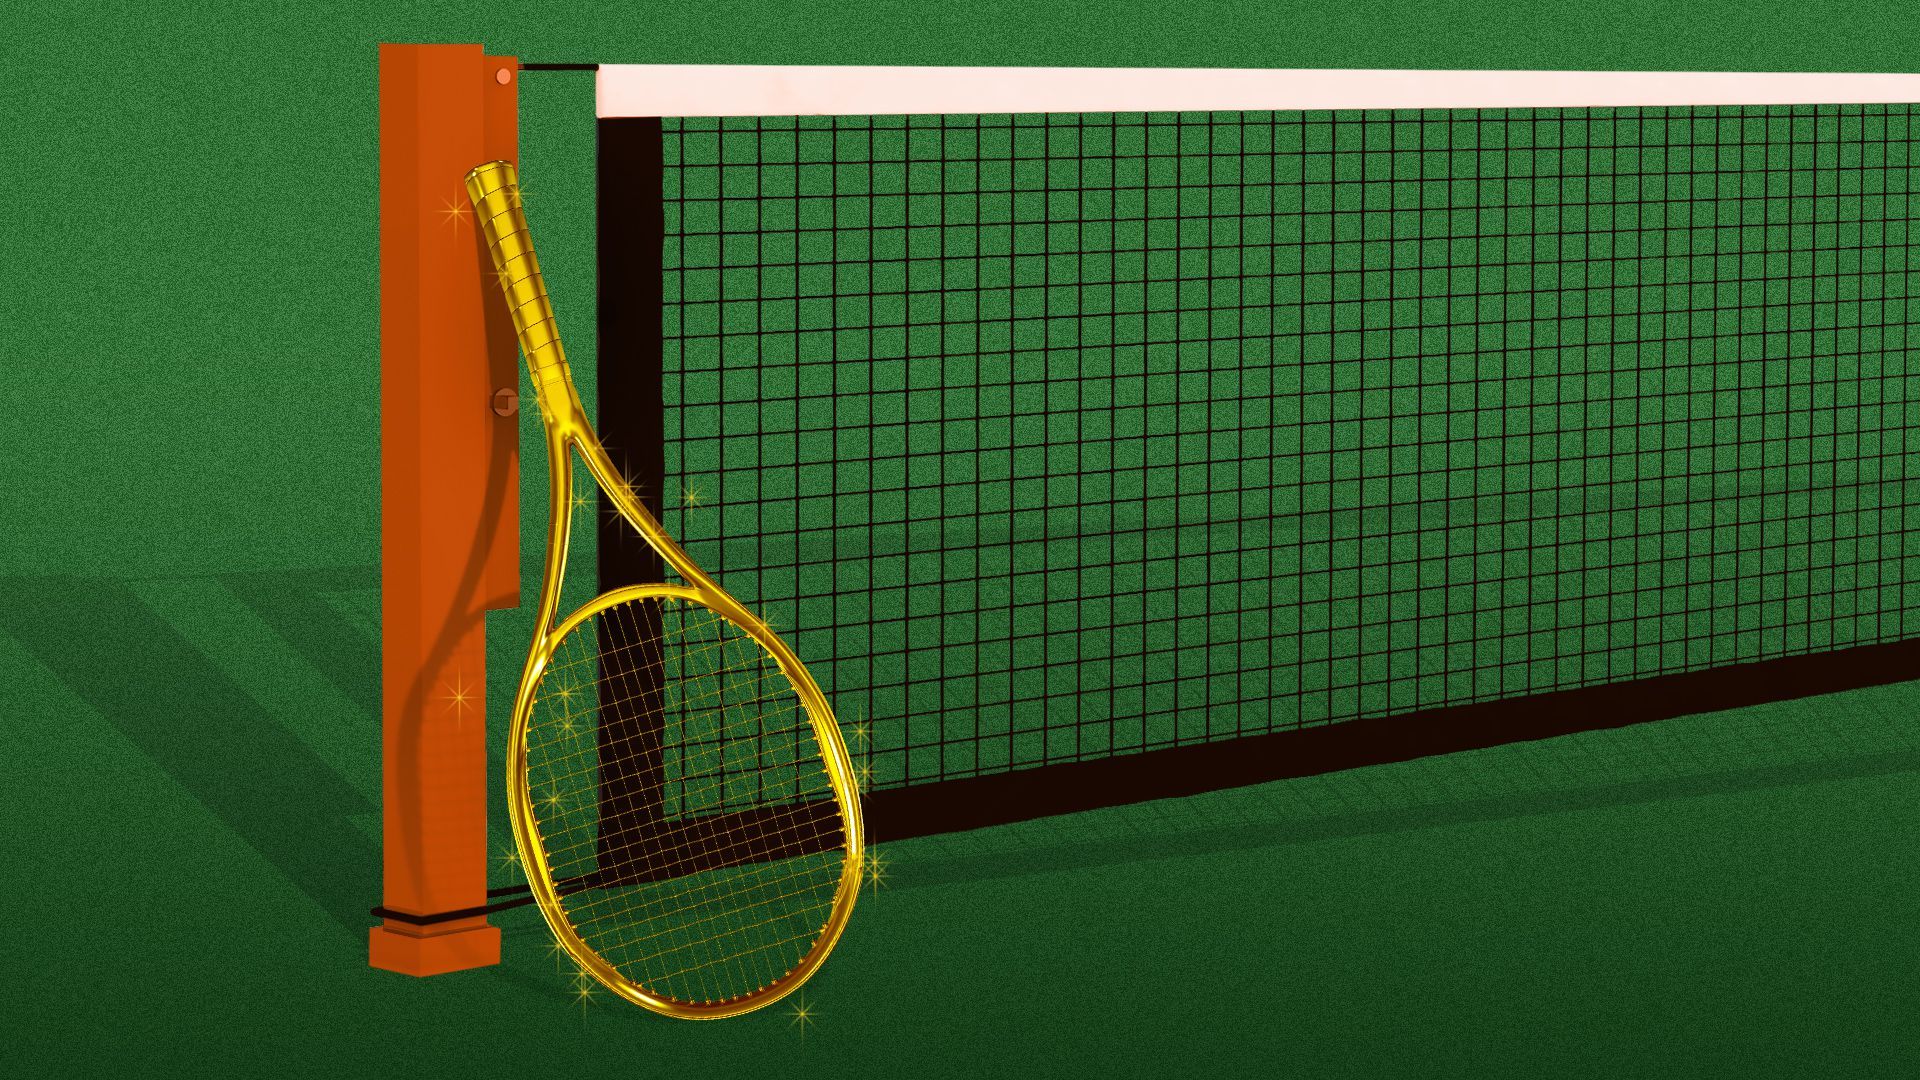 Illustration of a sparkling golden tennis racket leaned against a tennis net